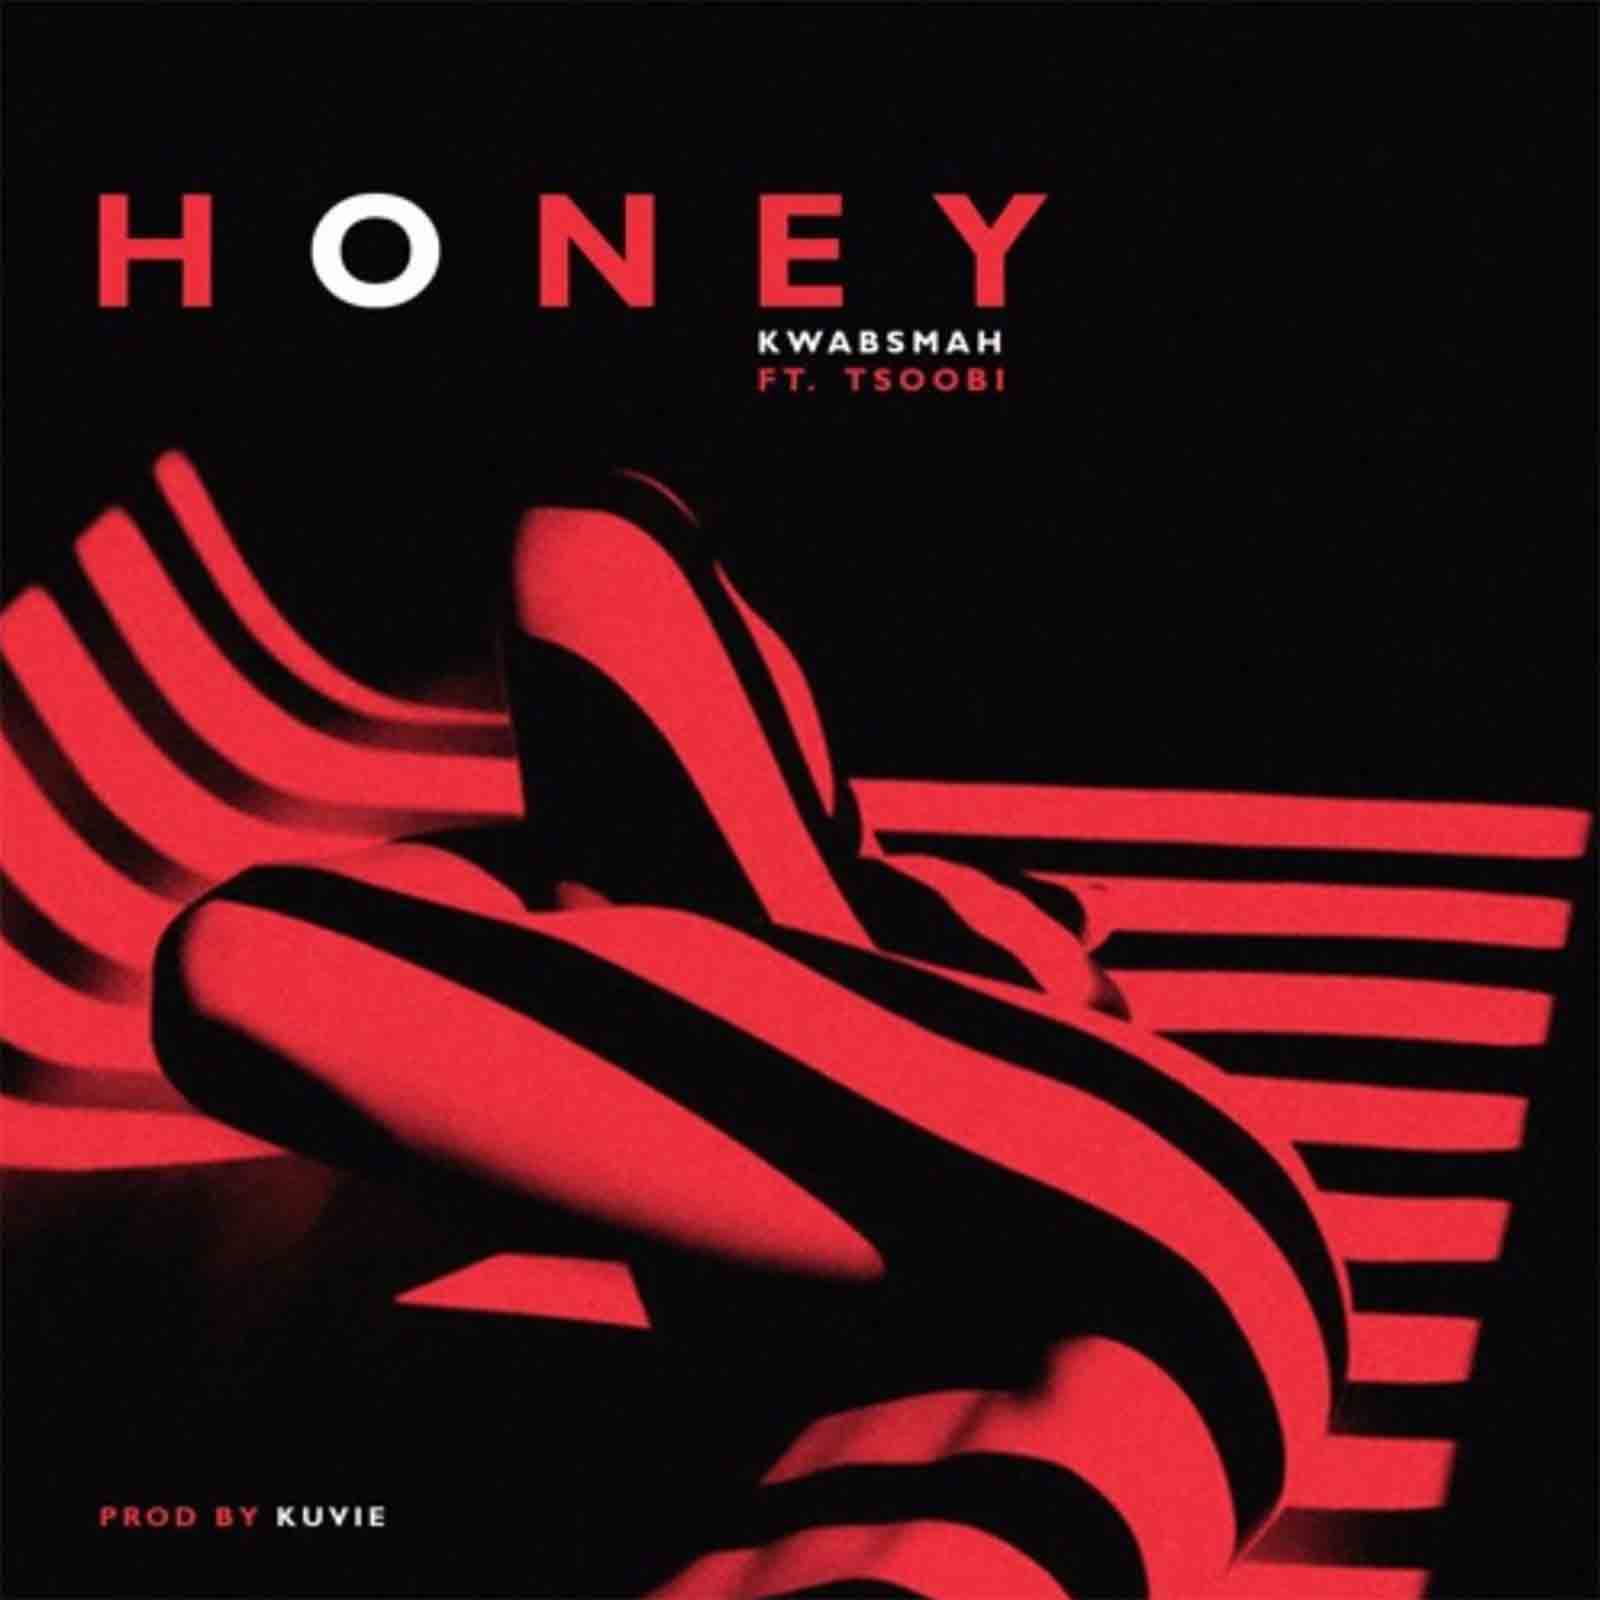 Honey (L3 Me) by Kwabsmah feat. Tsoobi